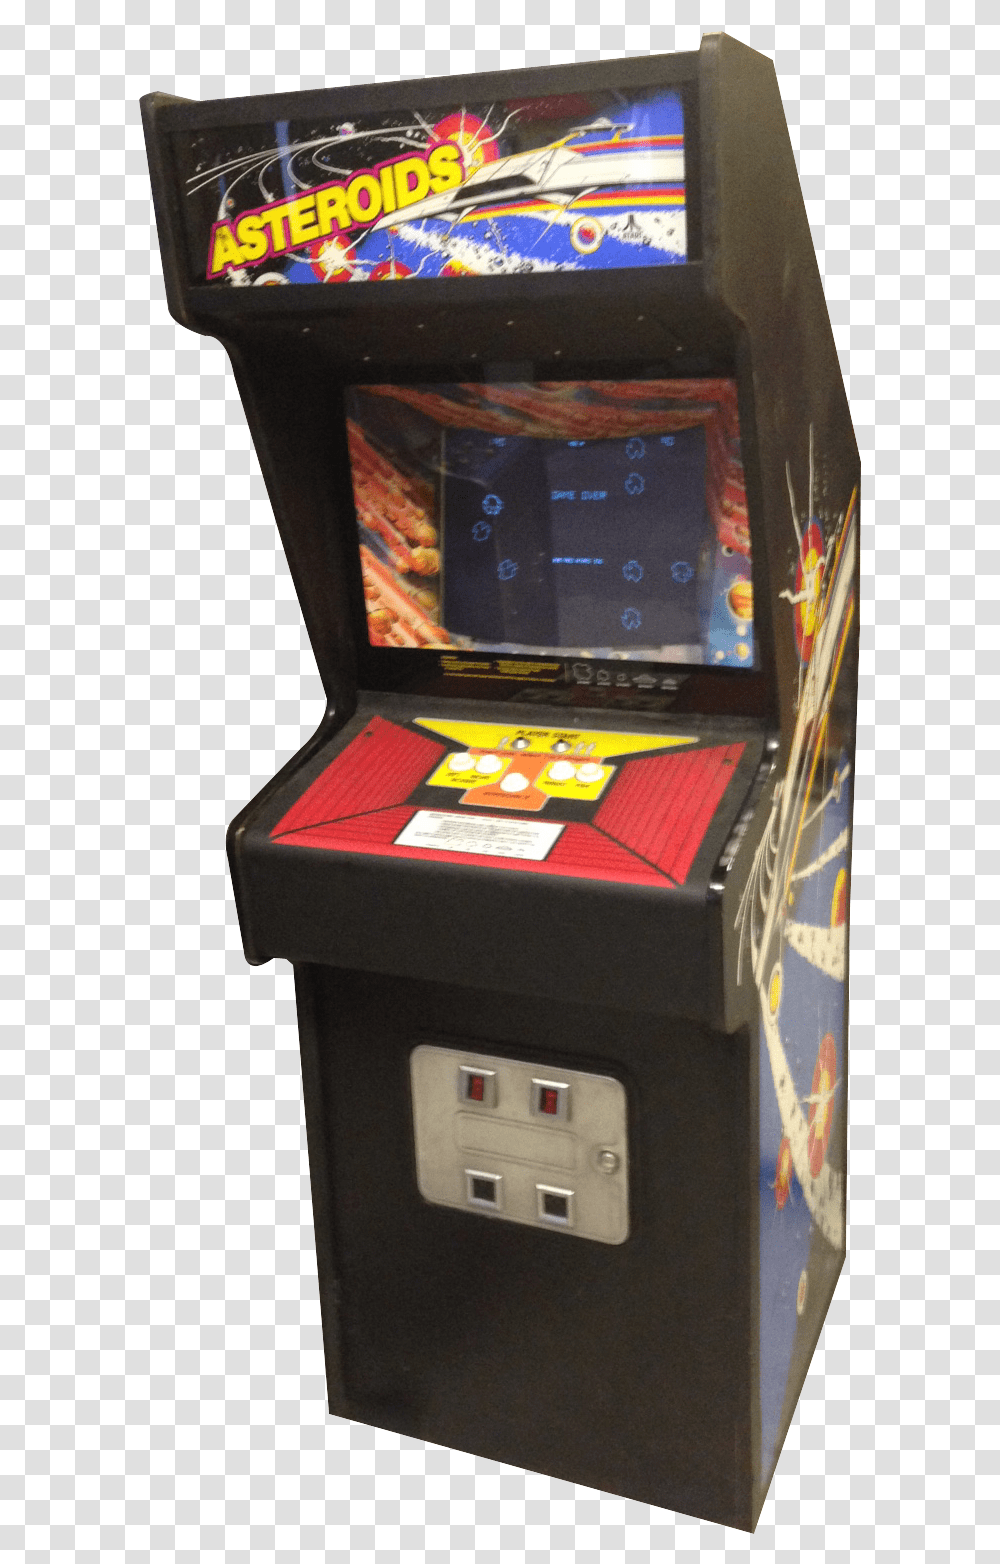 Asteroids Arcade Machine For Hire Asteroids Arcade Machine, Arcade Game Machine Transparent Png